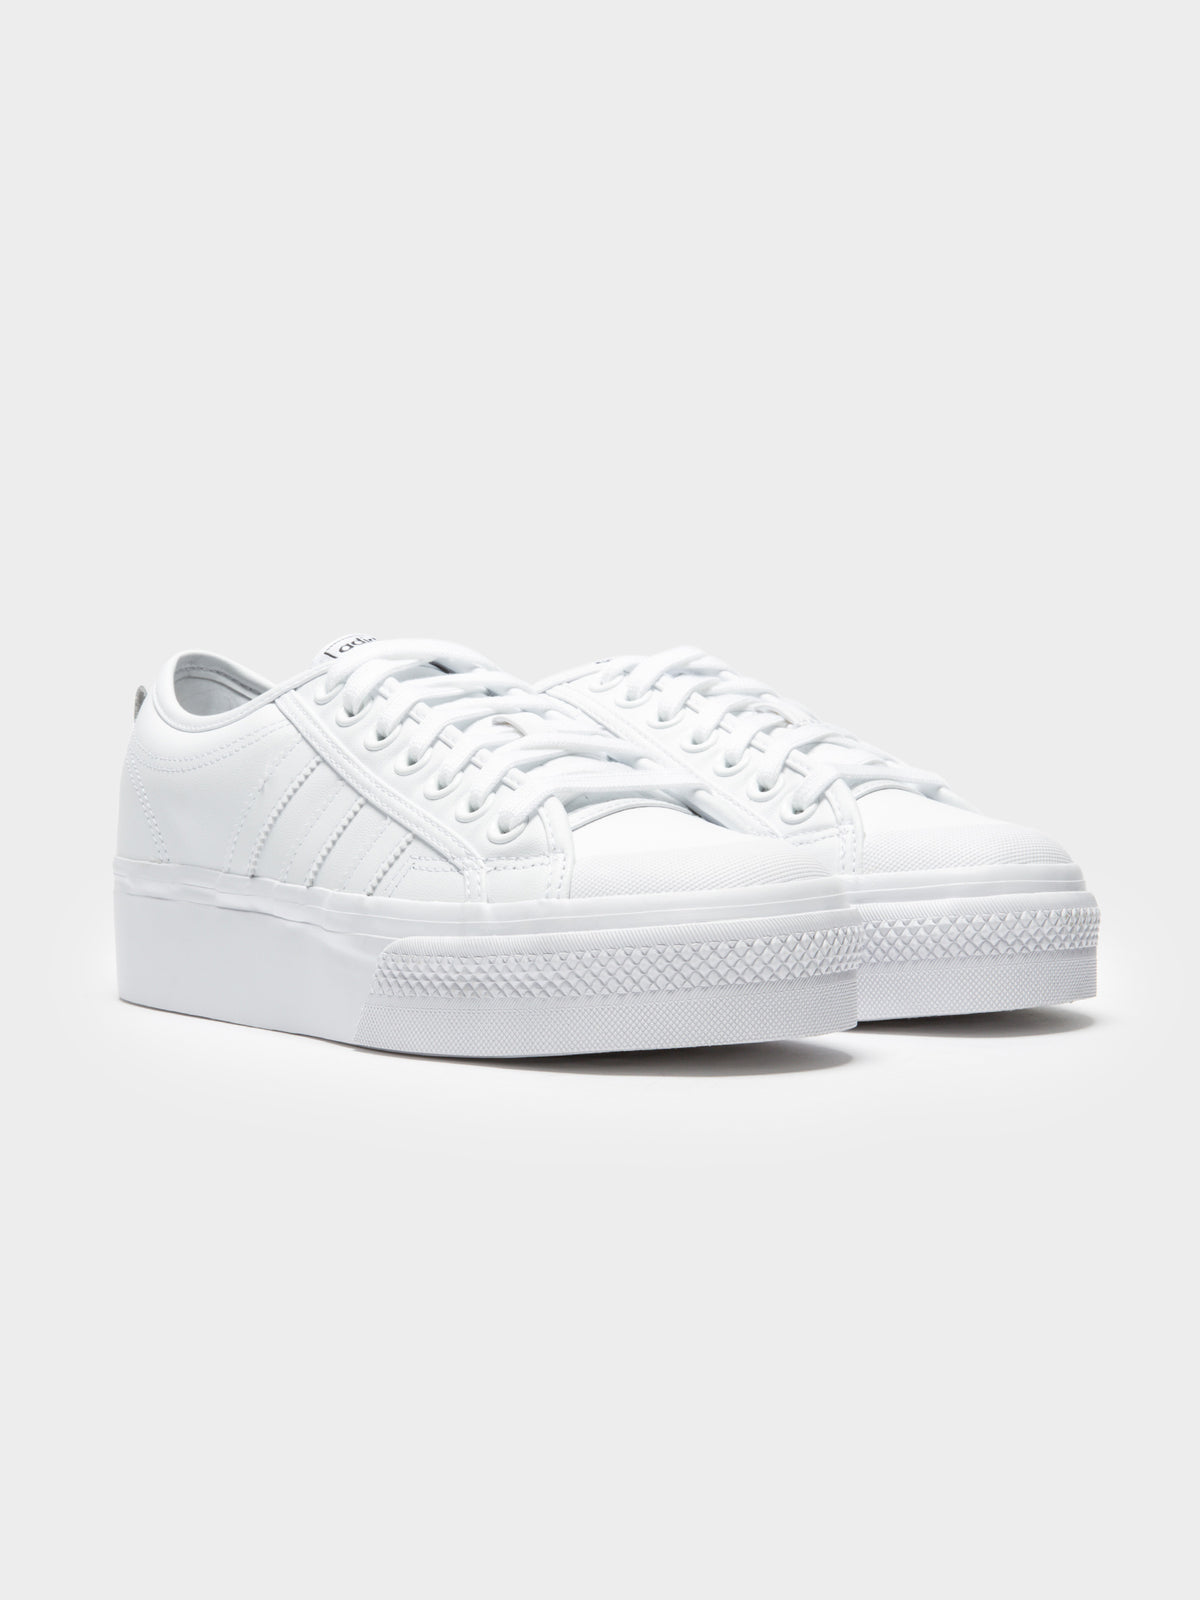 Womens Nizza Platform Sneakers in White